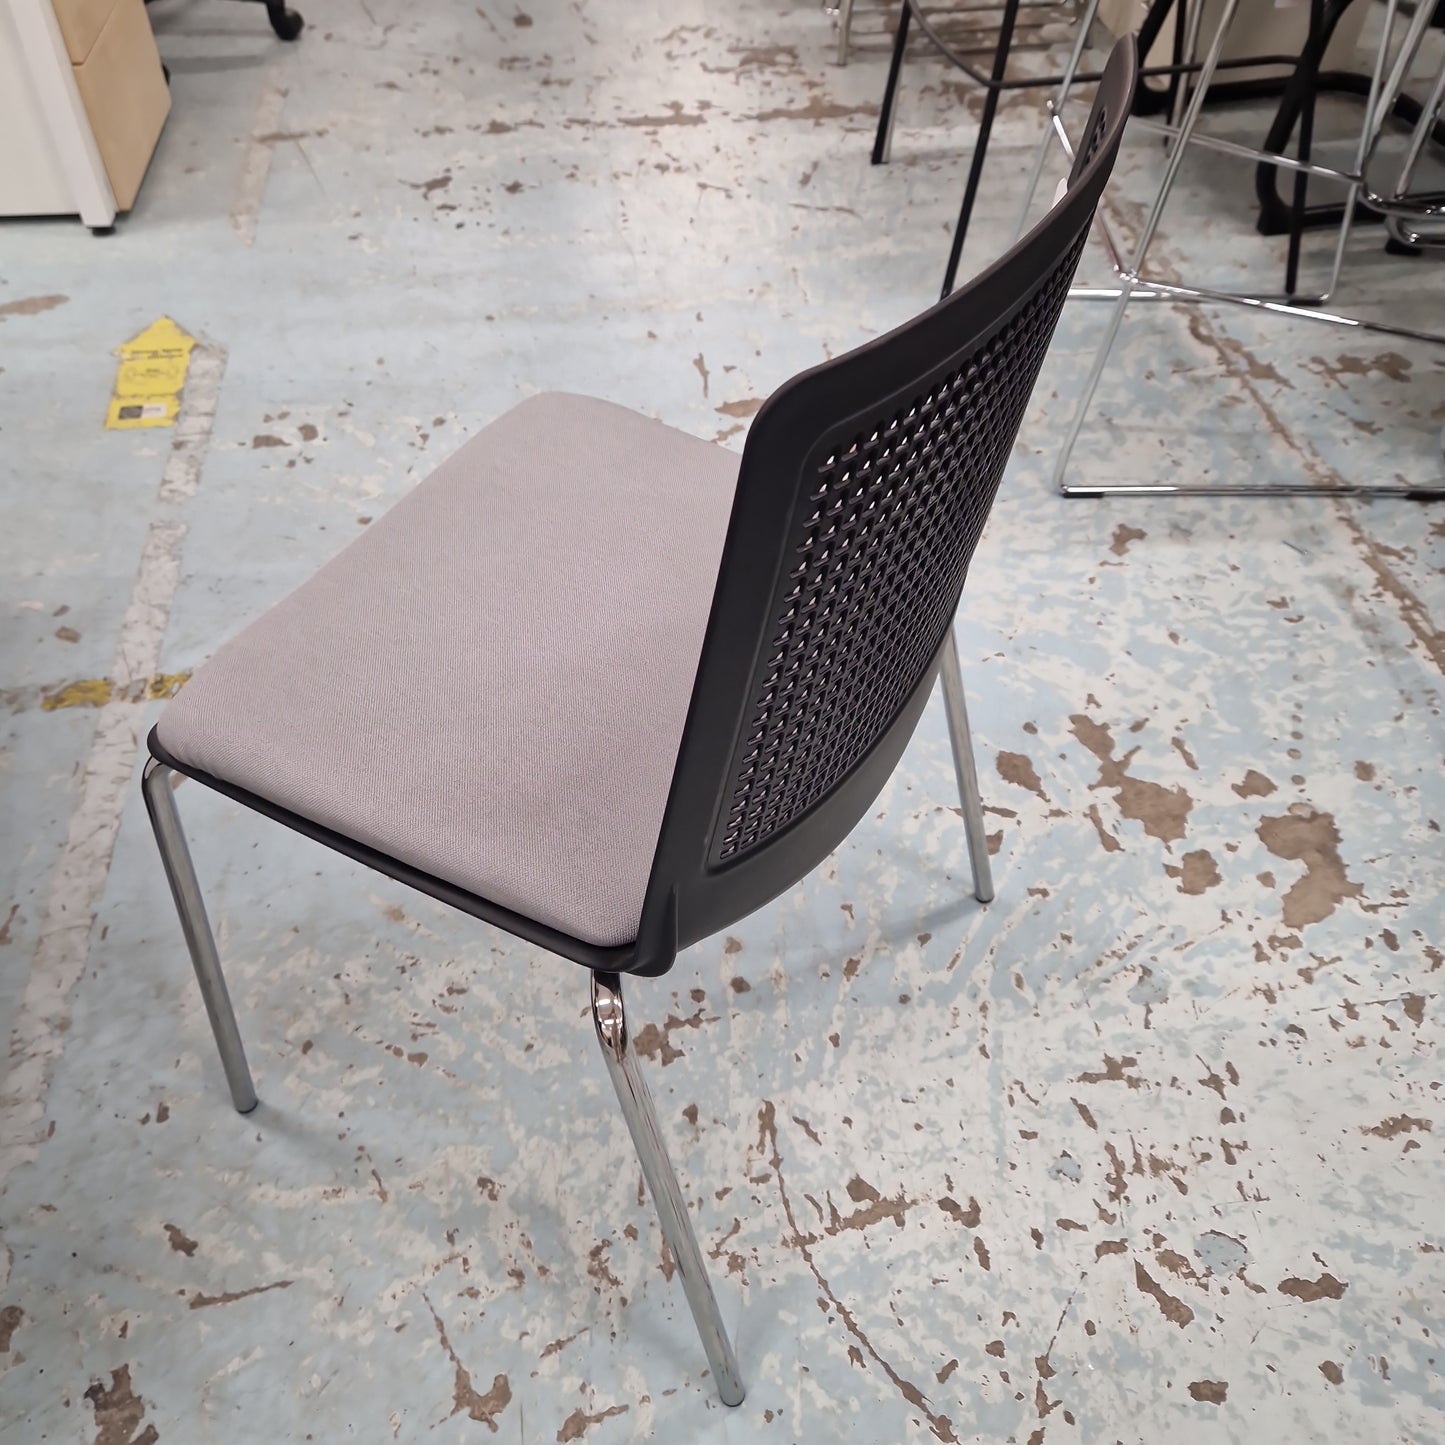 Santana plastic and fabric stacking chair